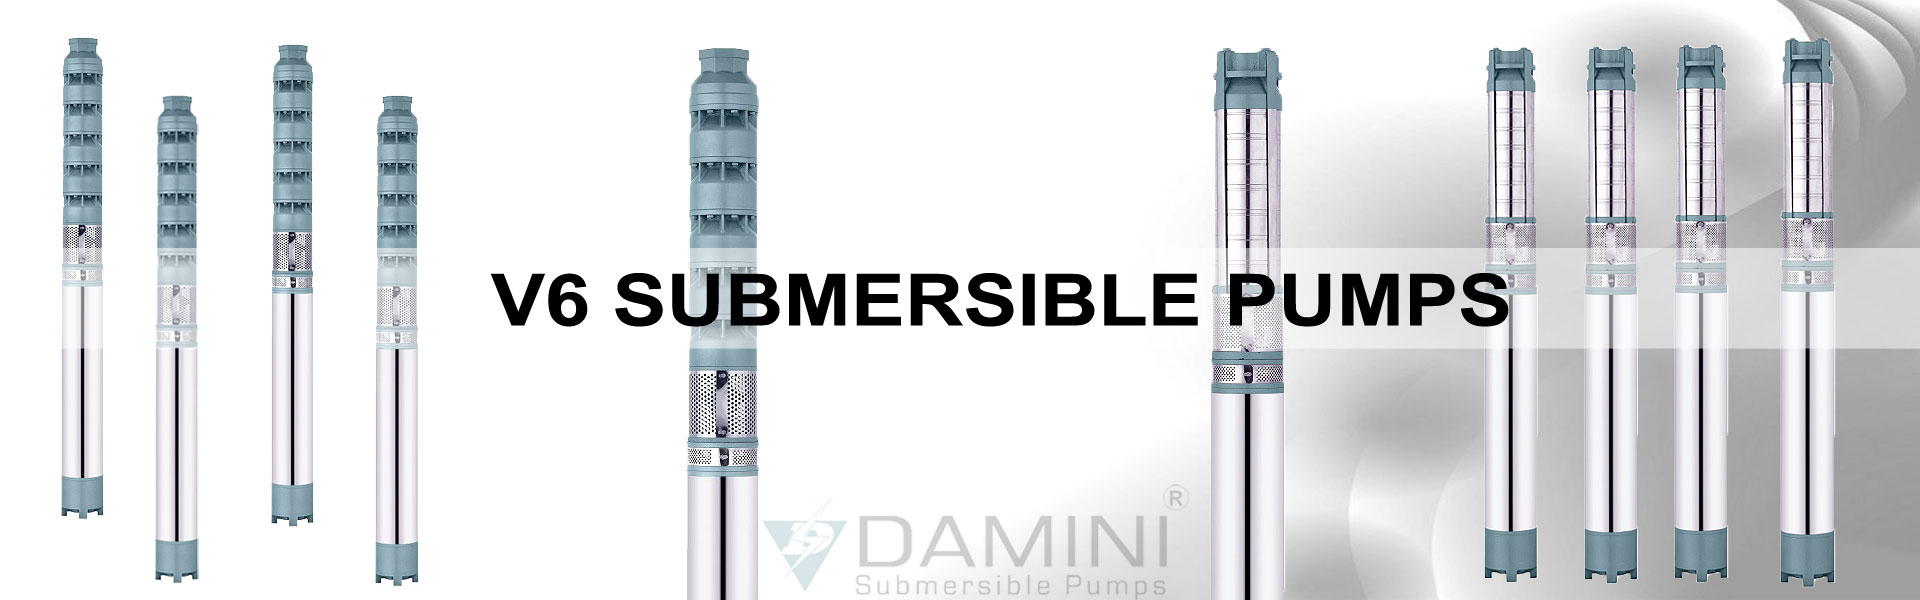 V6 Submersible Pumps